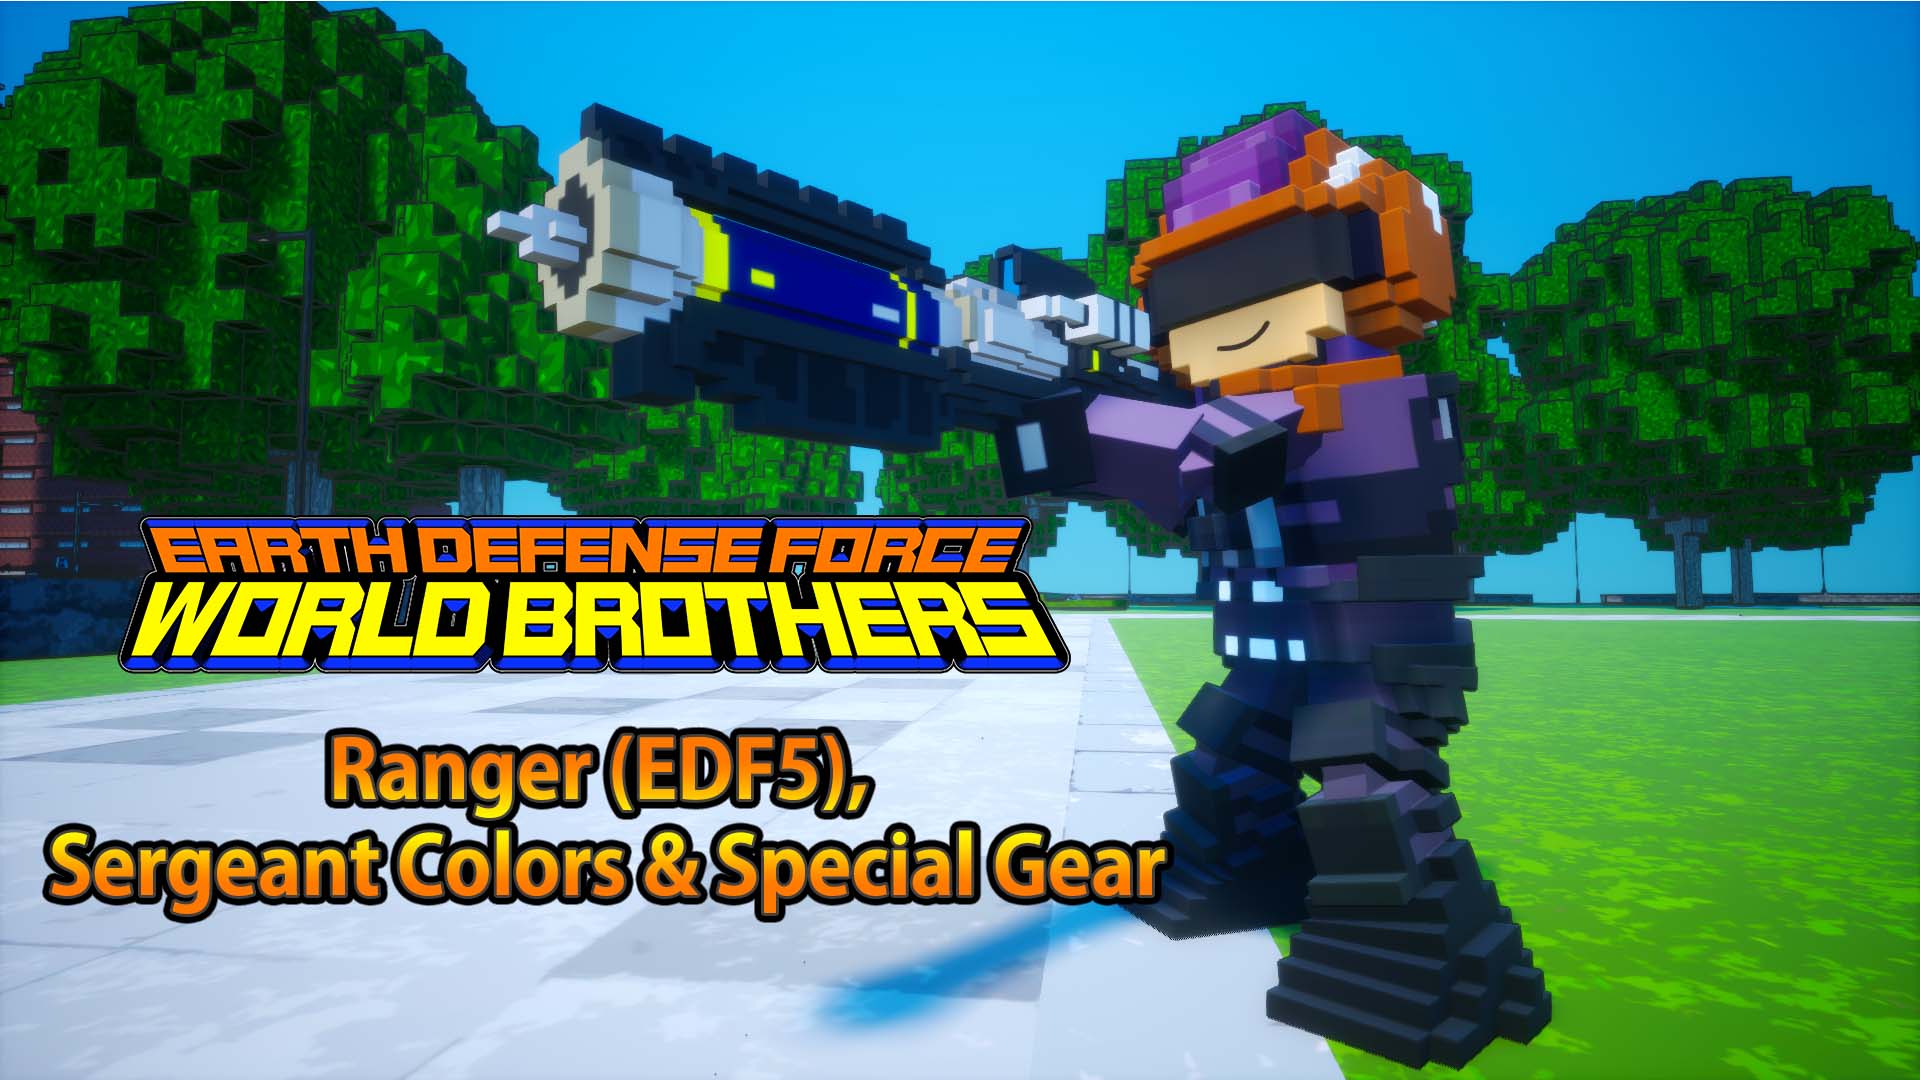 Ranger (EDF5), Sergeant Colors & Special Gear